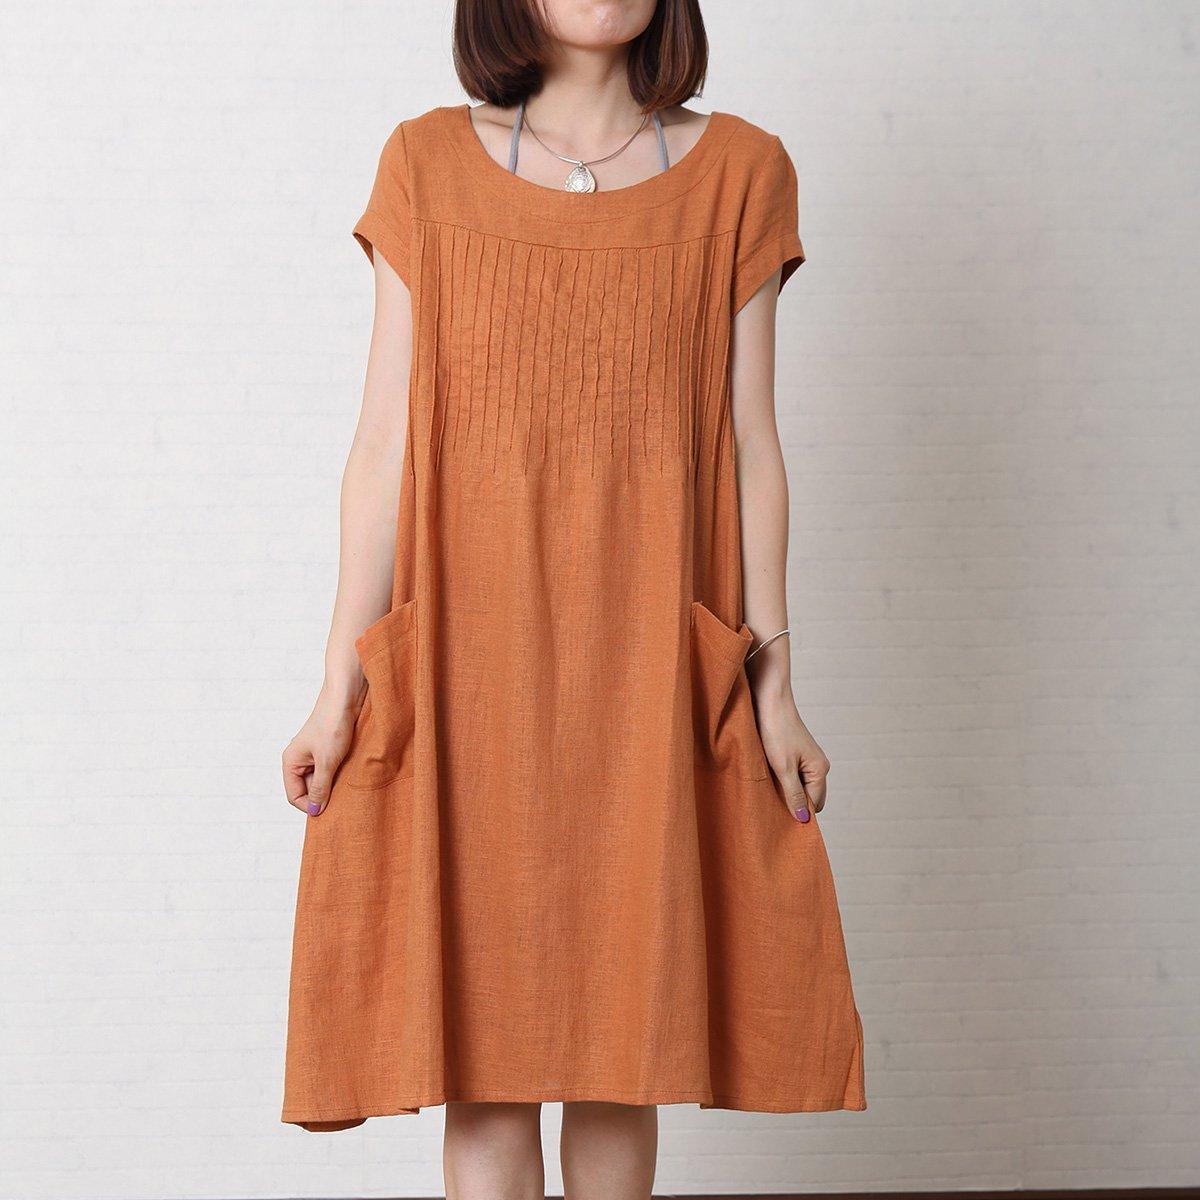 Orange linen dress plus size summer maxi dress cotton sundress - Omychic